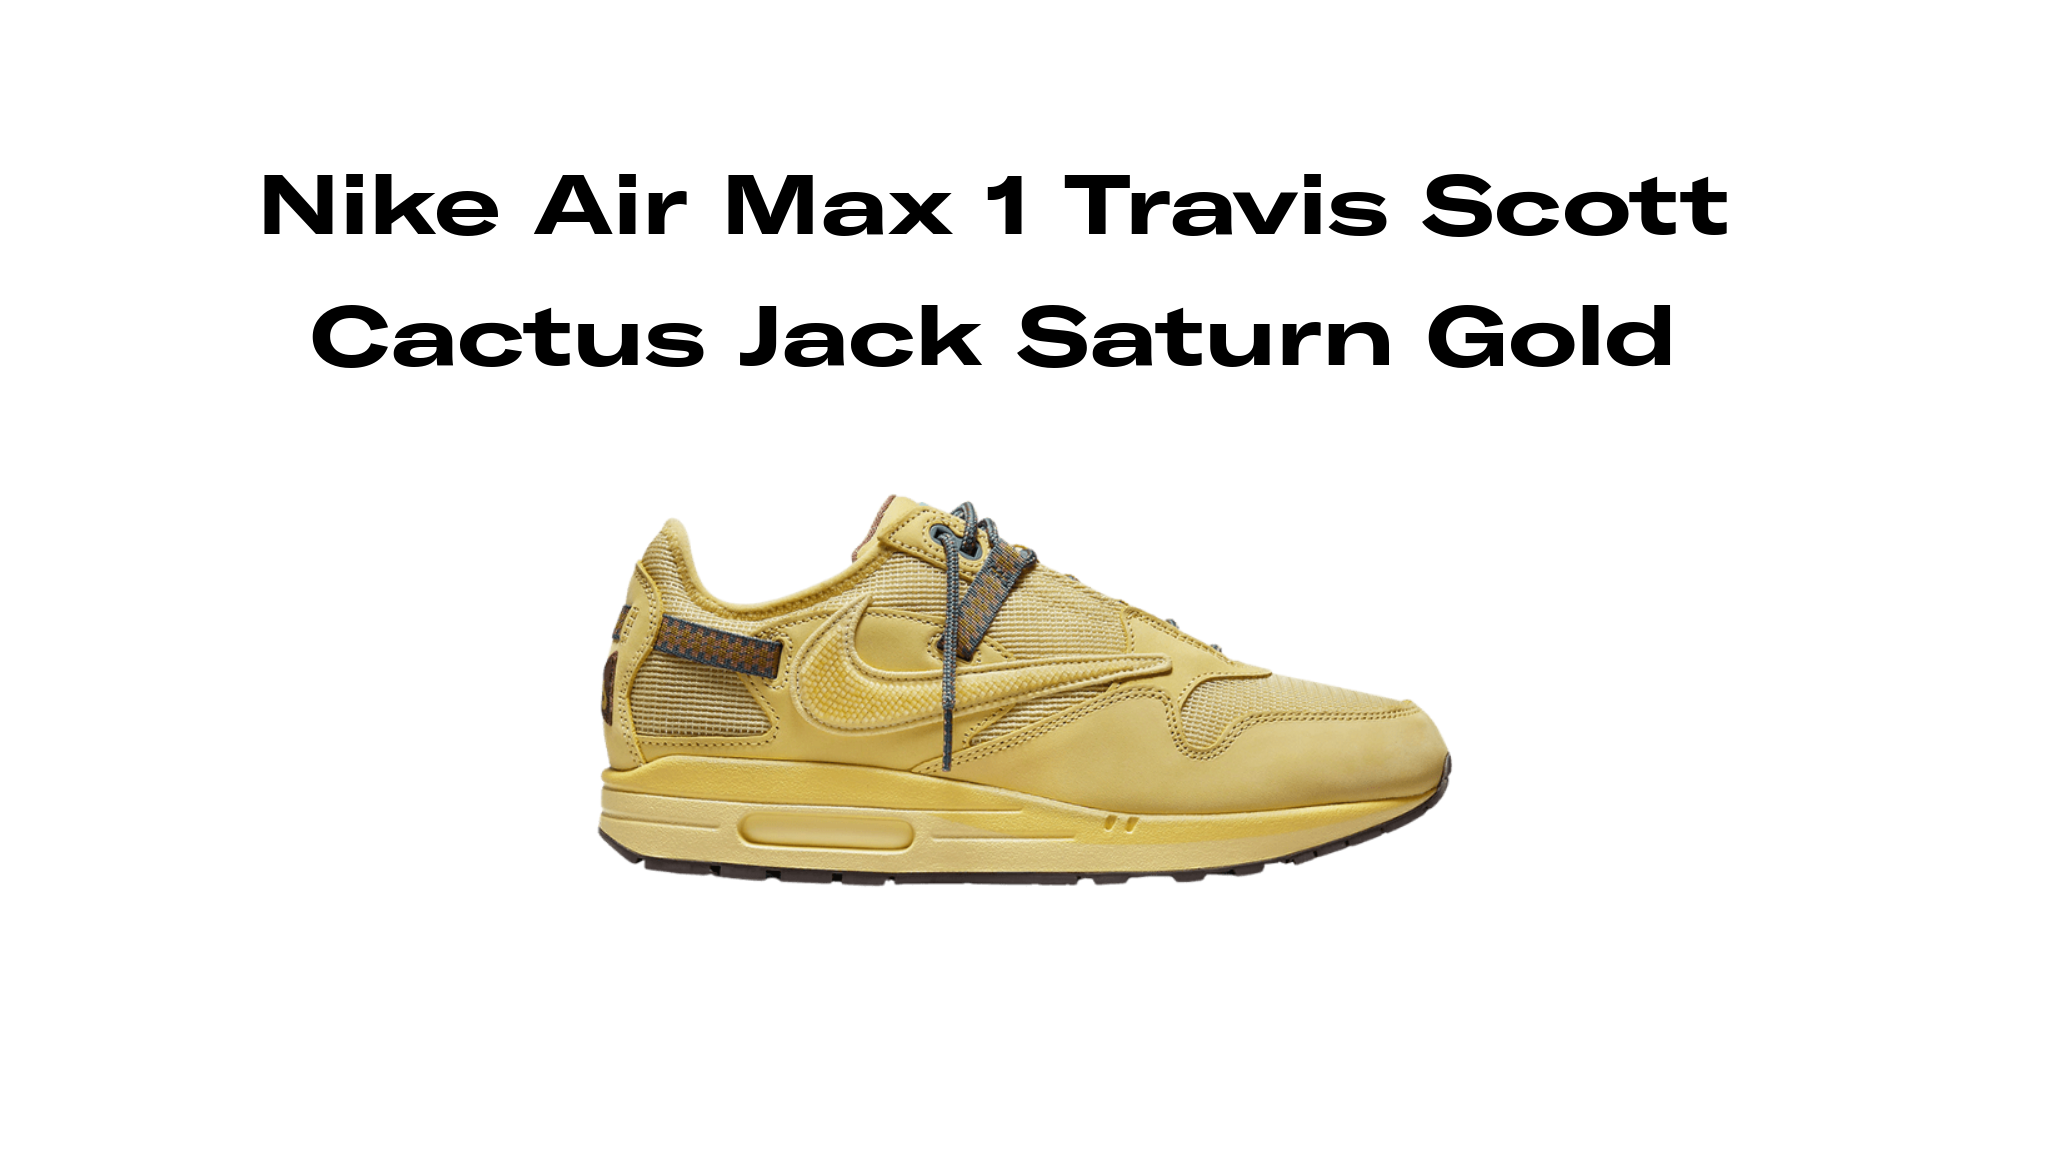 Nike Air Max 1 Travis Scott Cactus Jack Saturn Gold, Raffles and 